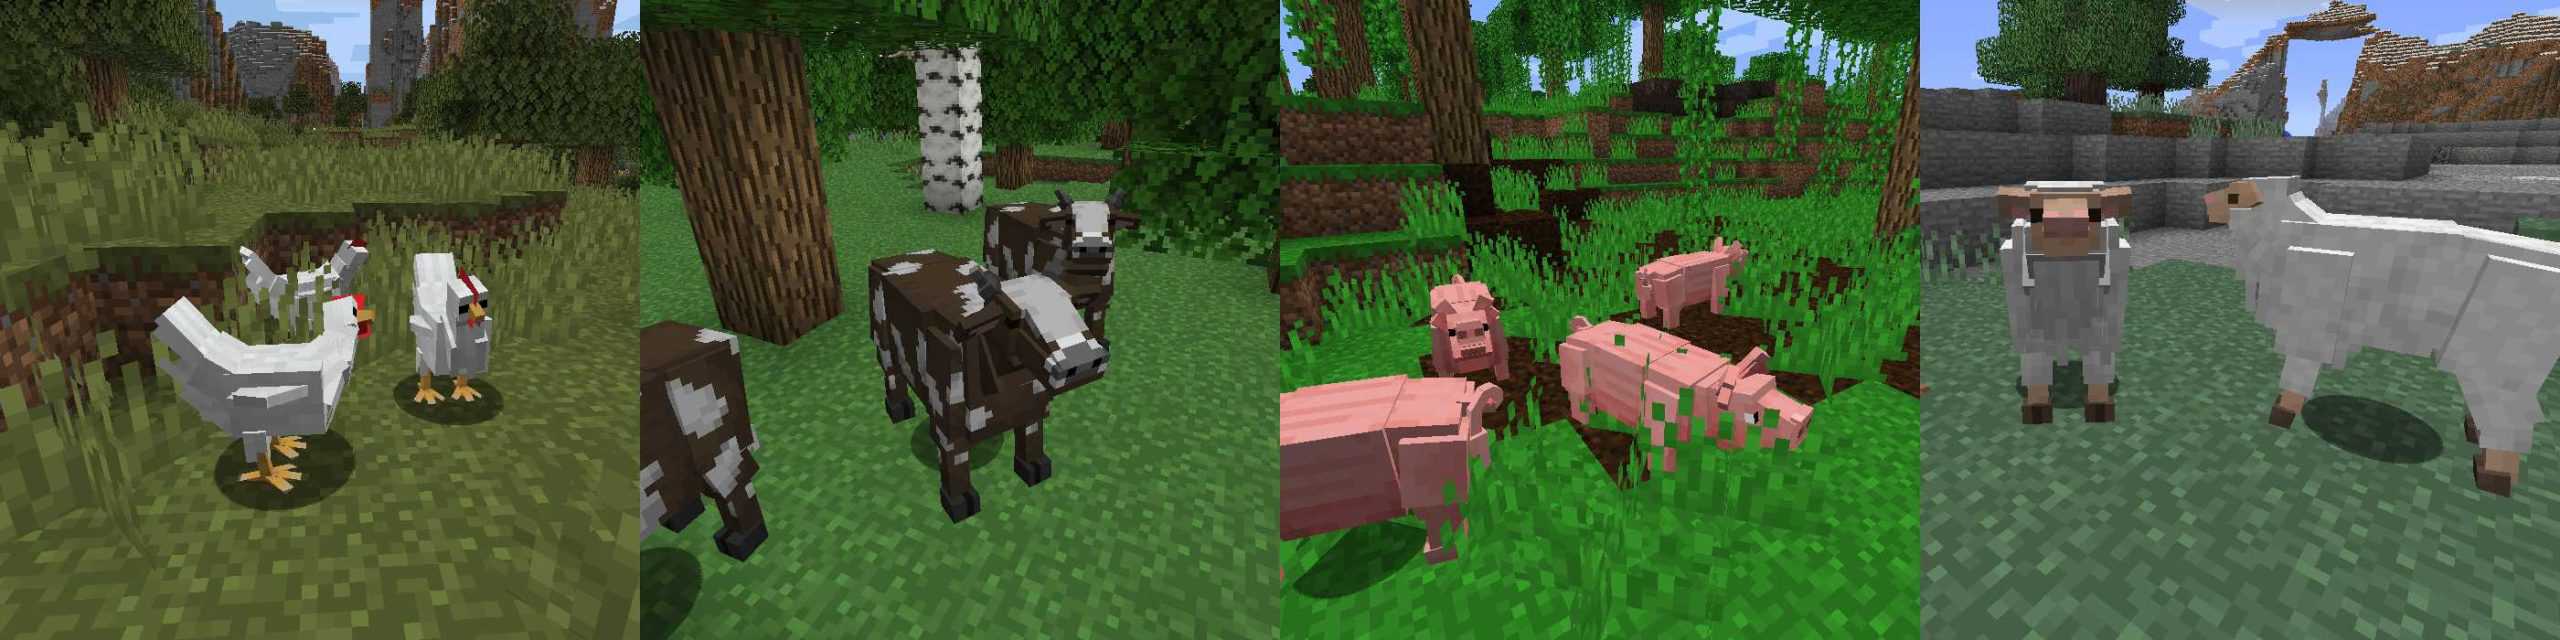 minecraft better animals models mod